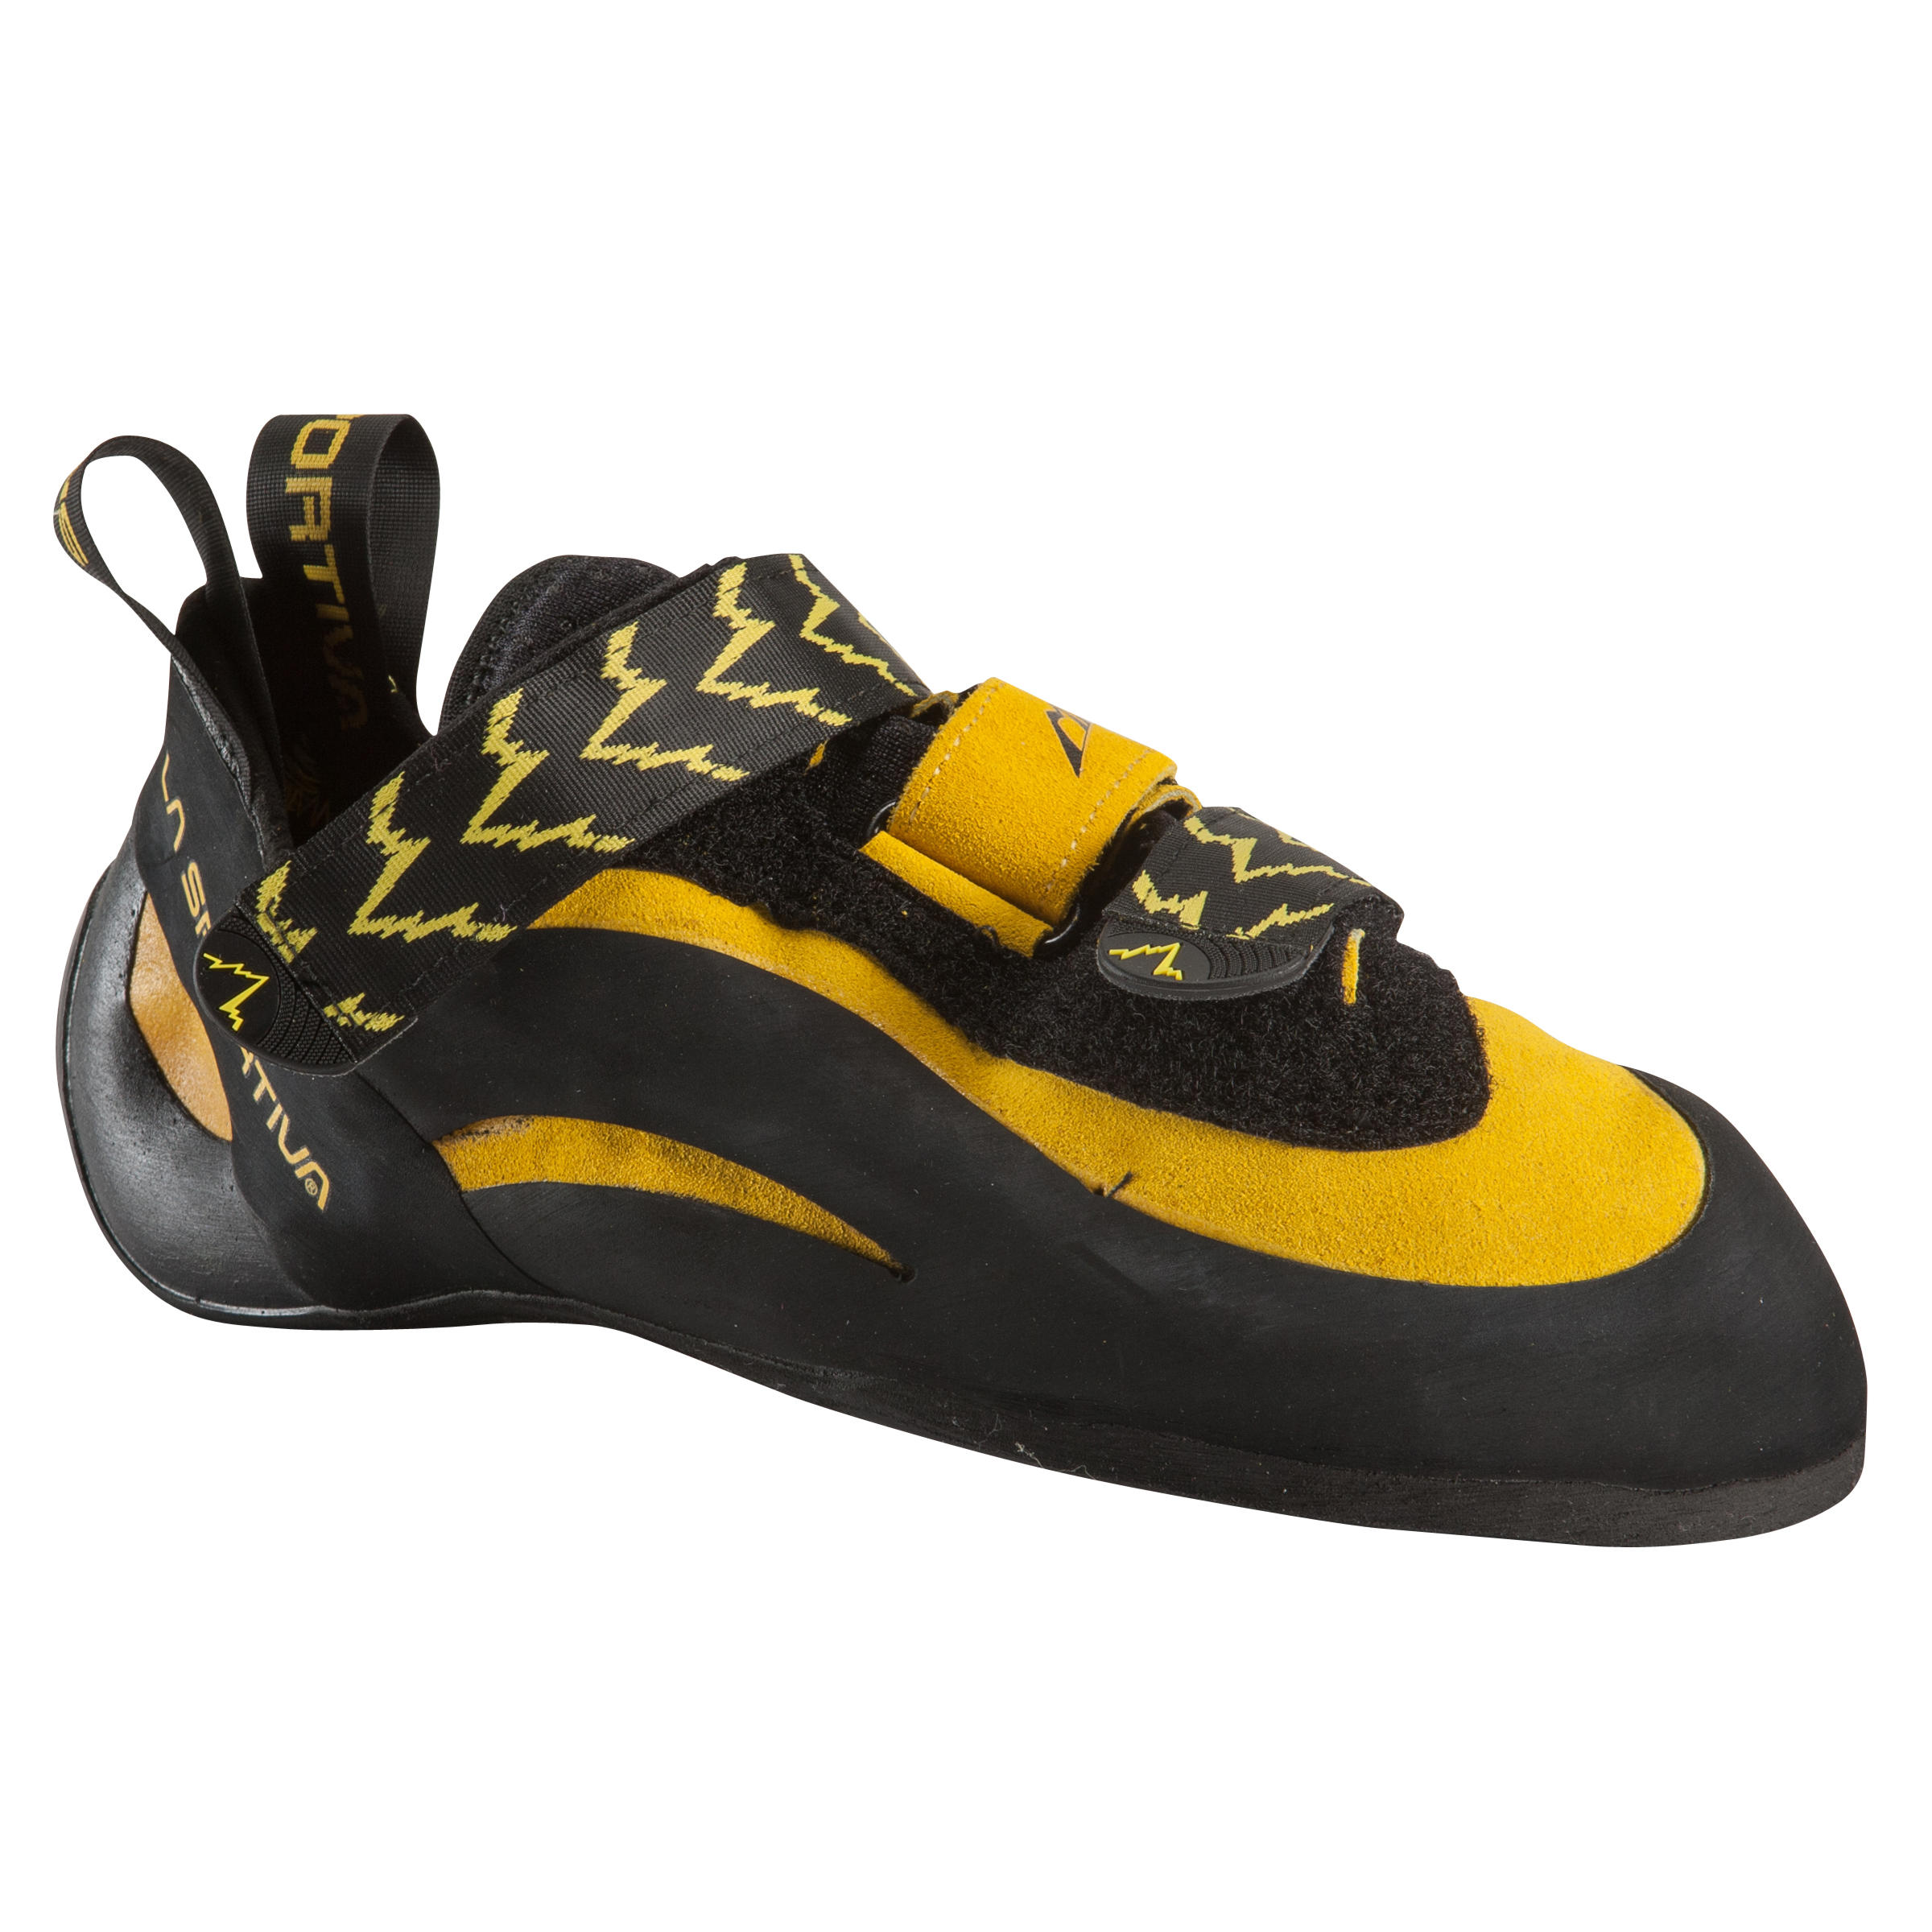 decathlon rock shoes